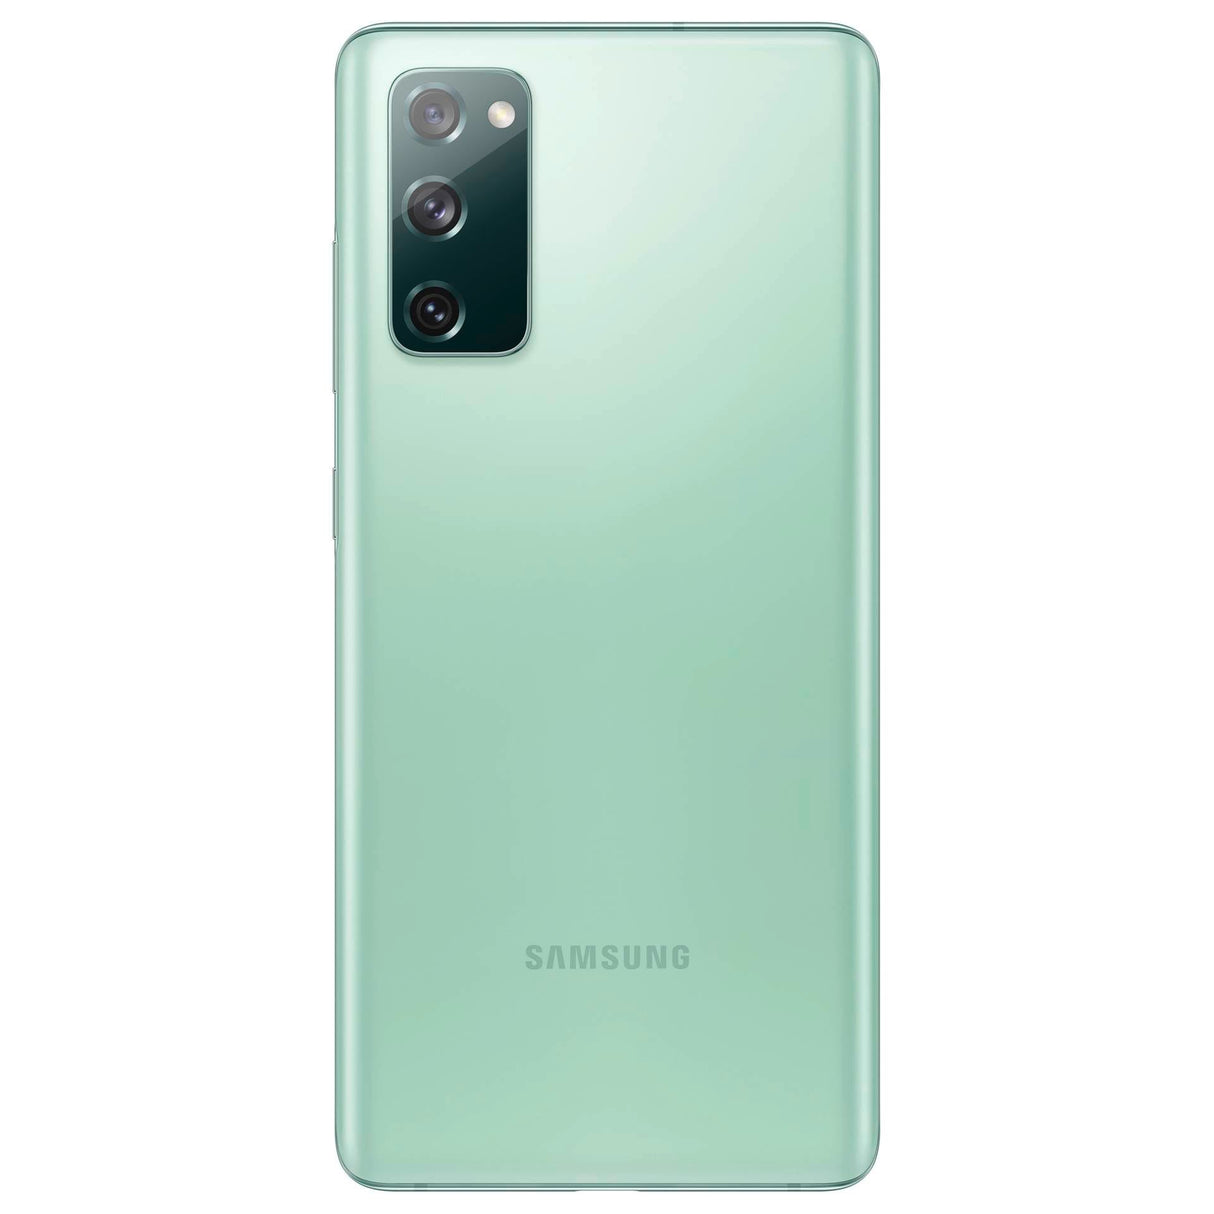 Samsung Galaxy S20 FE Cloud Mint Green 256GB - Grado B